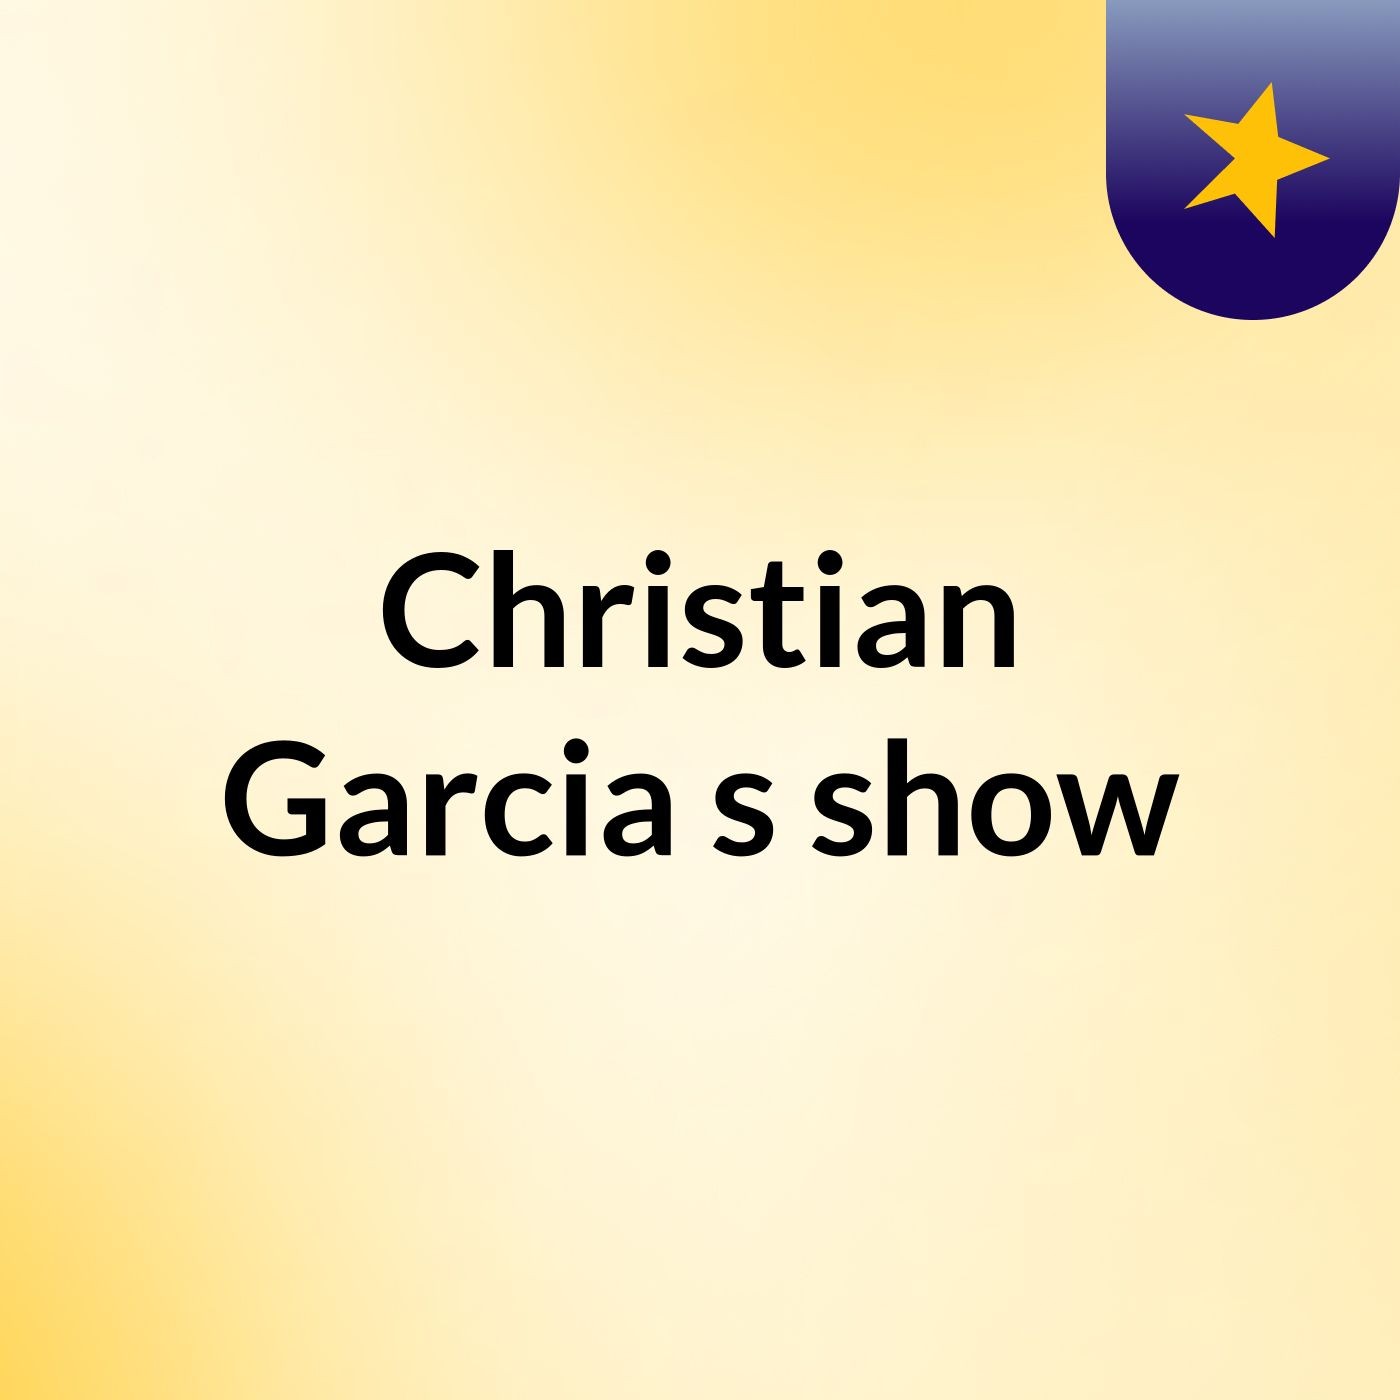 Christian Garcia's show